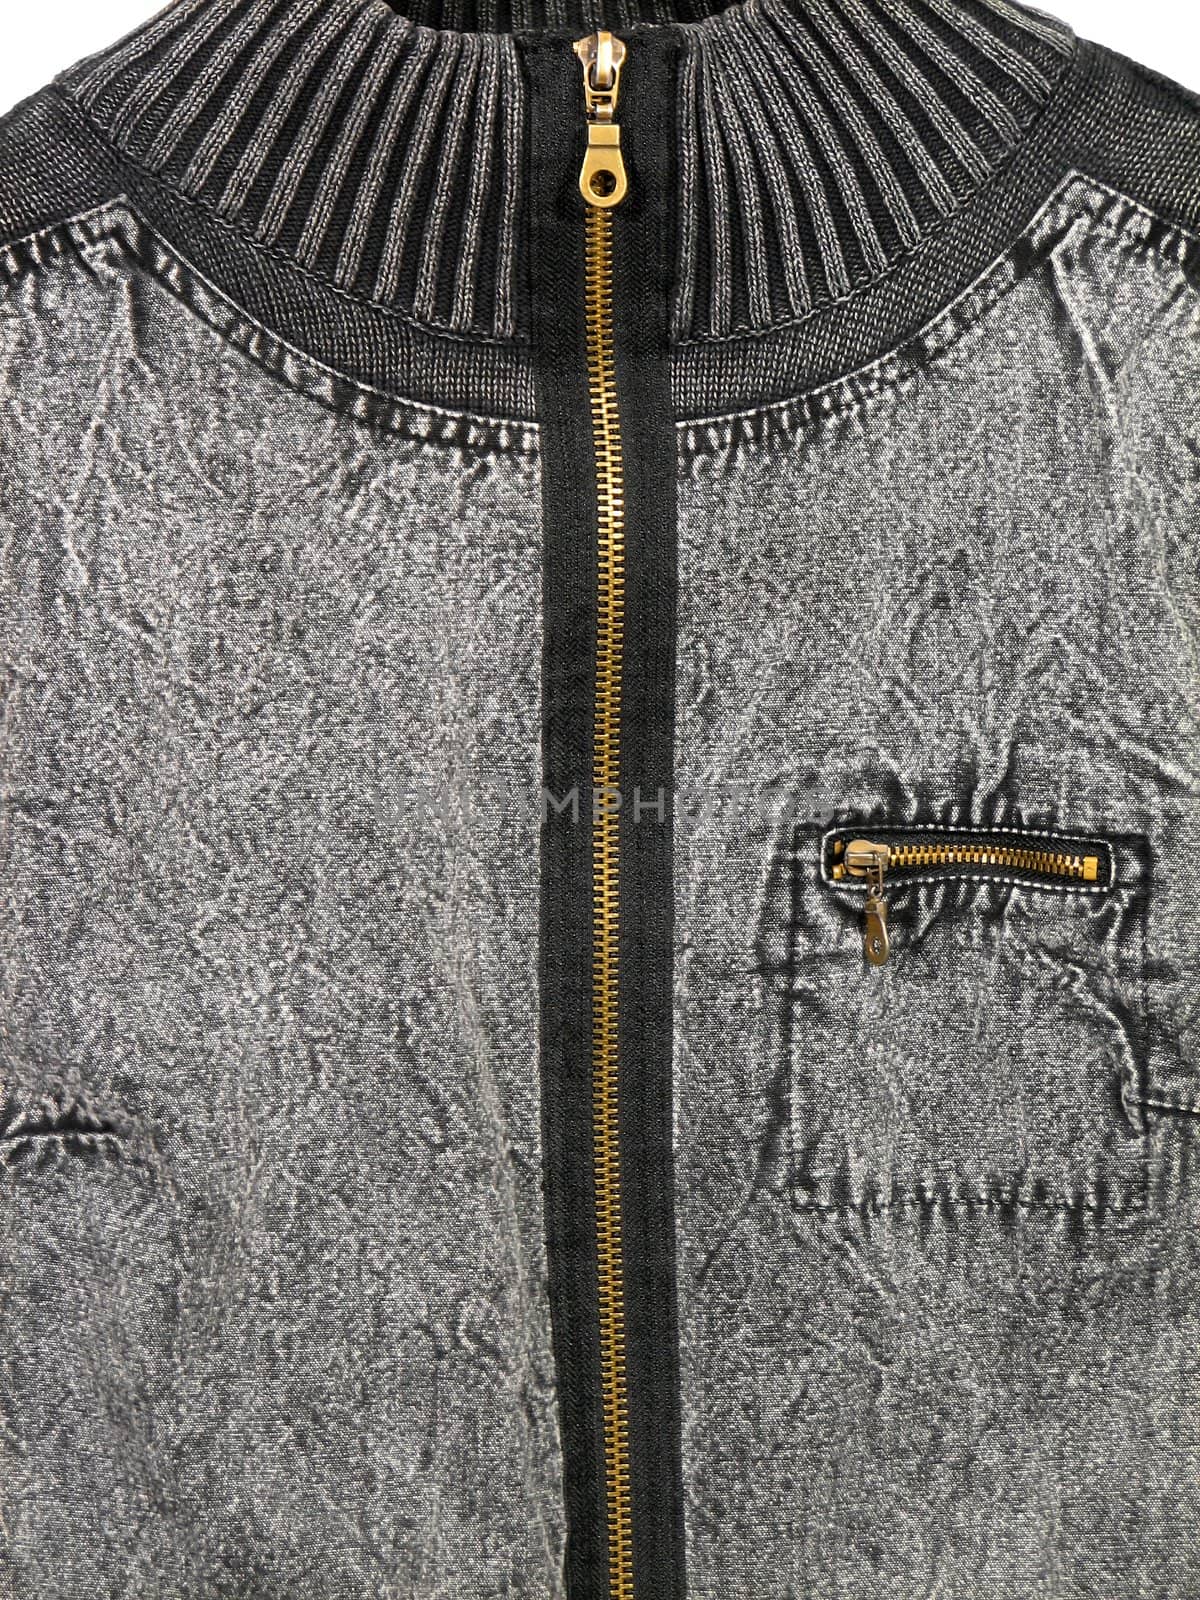 Closeup of a grey denim jacket with zippers.